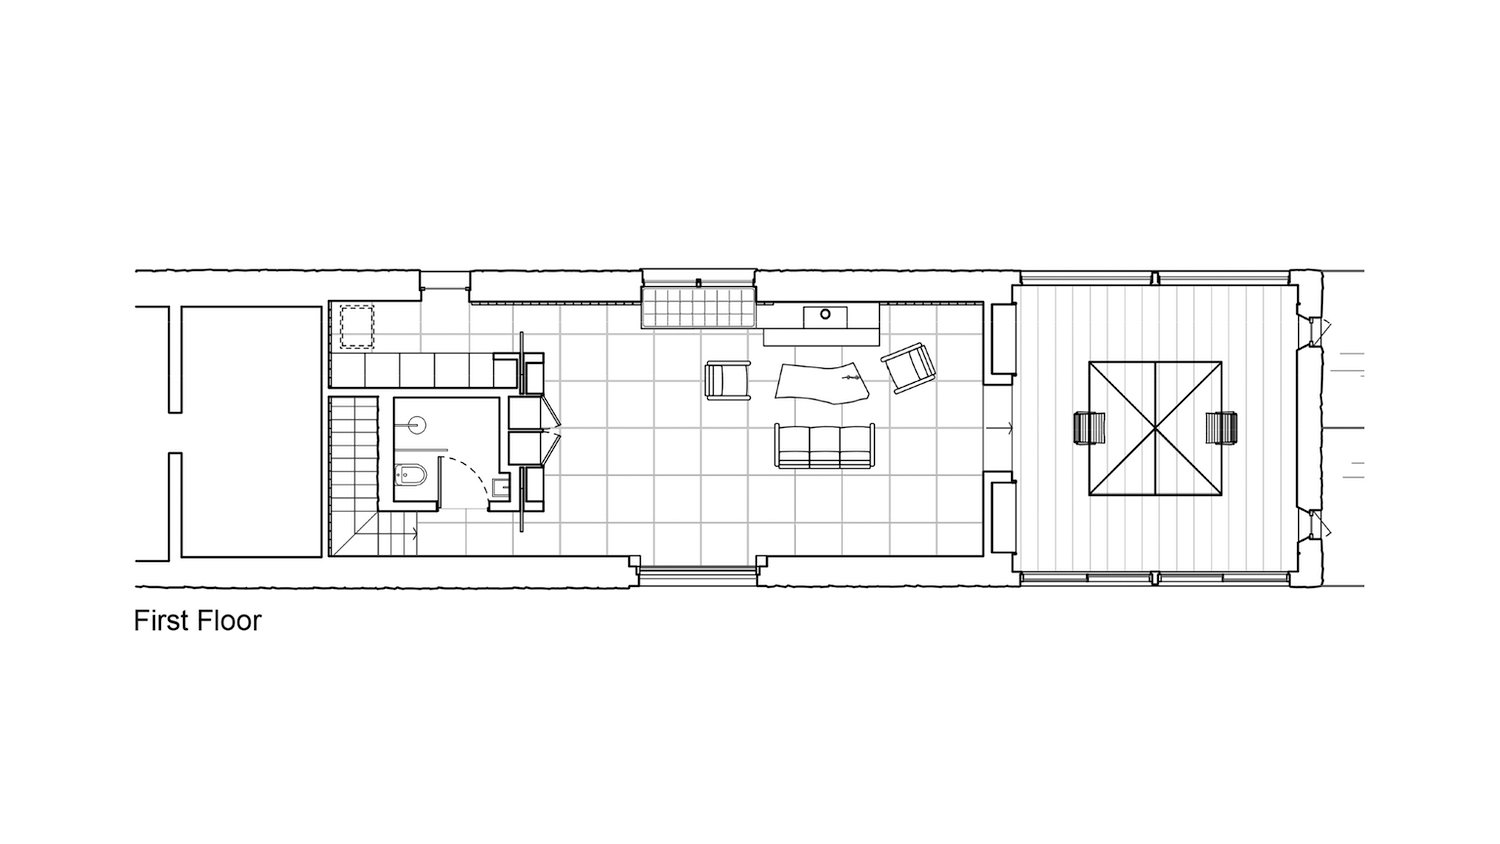 First floor plan of Easter Park Farm Studio | Richard Parr Associates